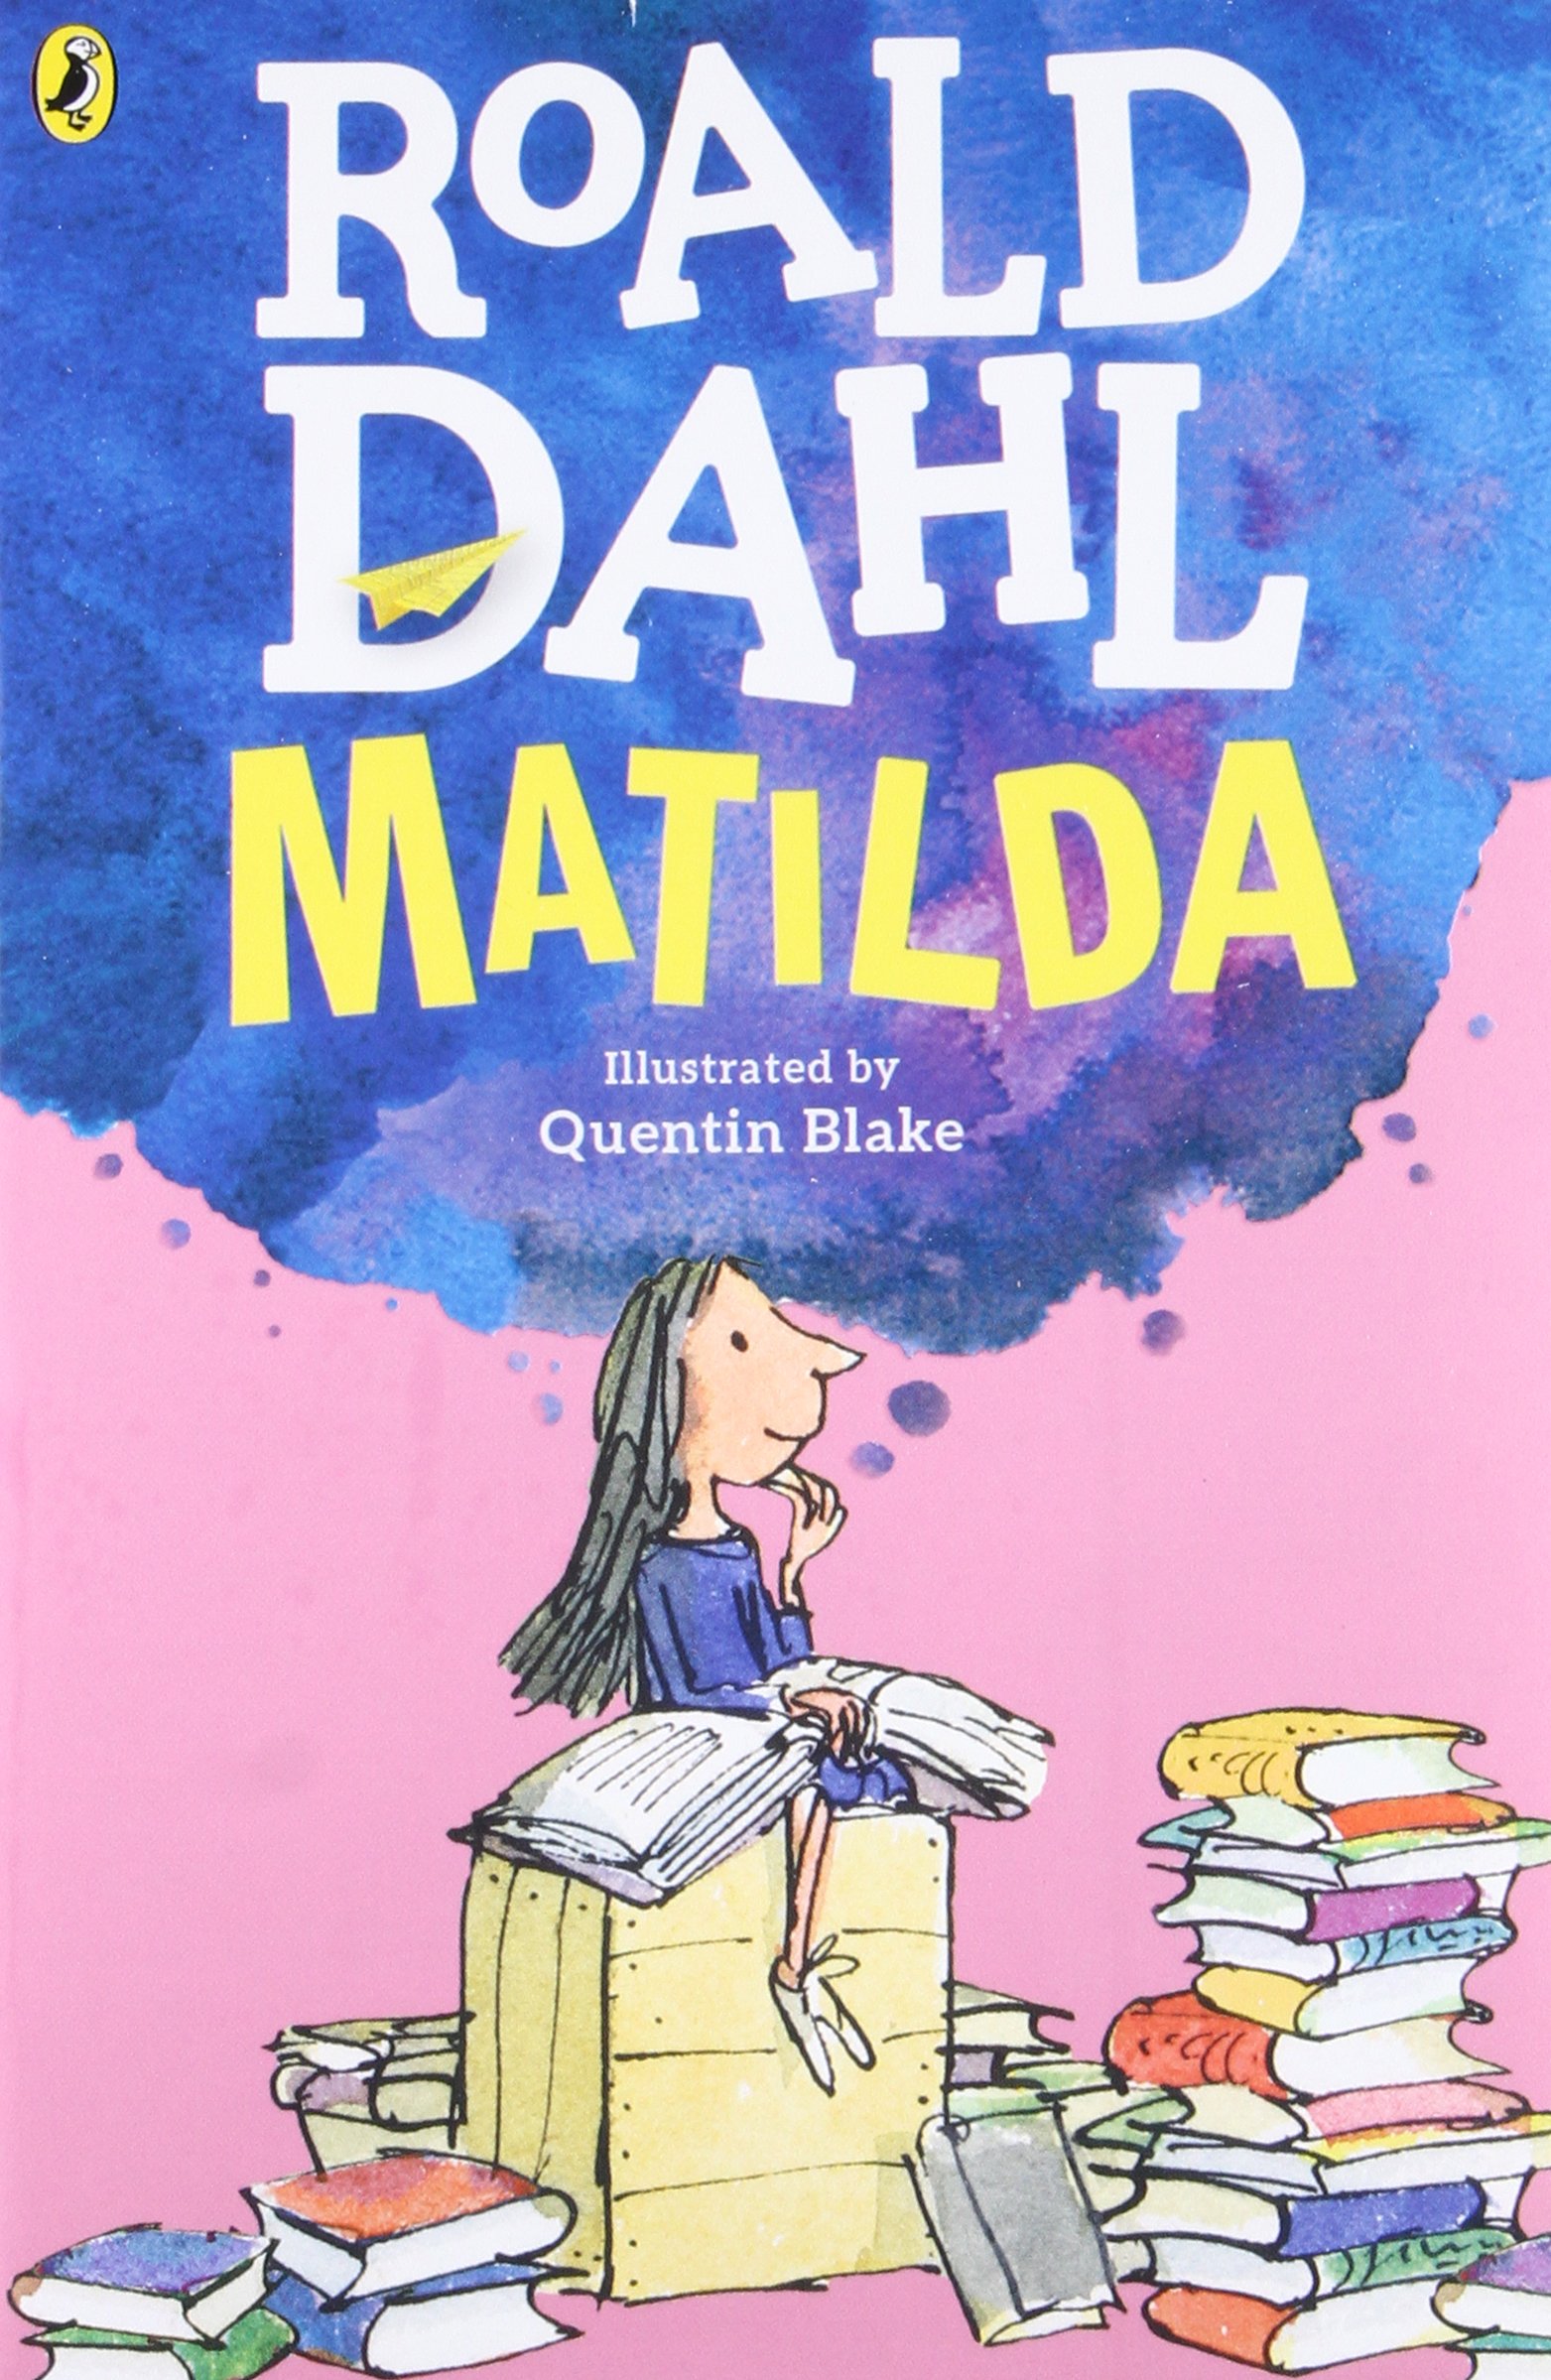 Matilda read. Dahl Roald "Matilda".